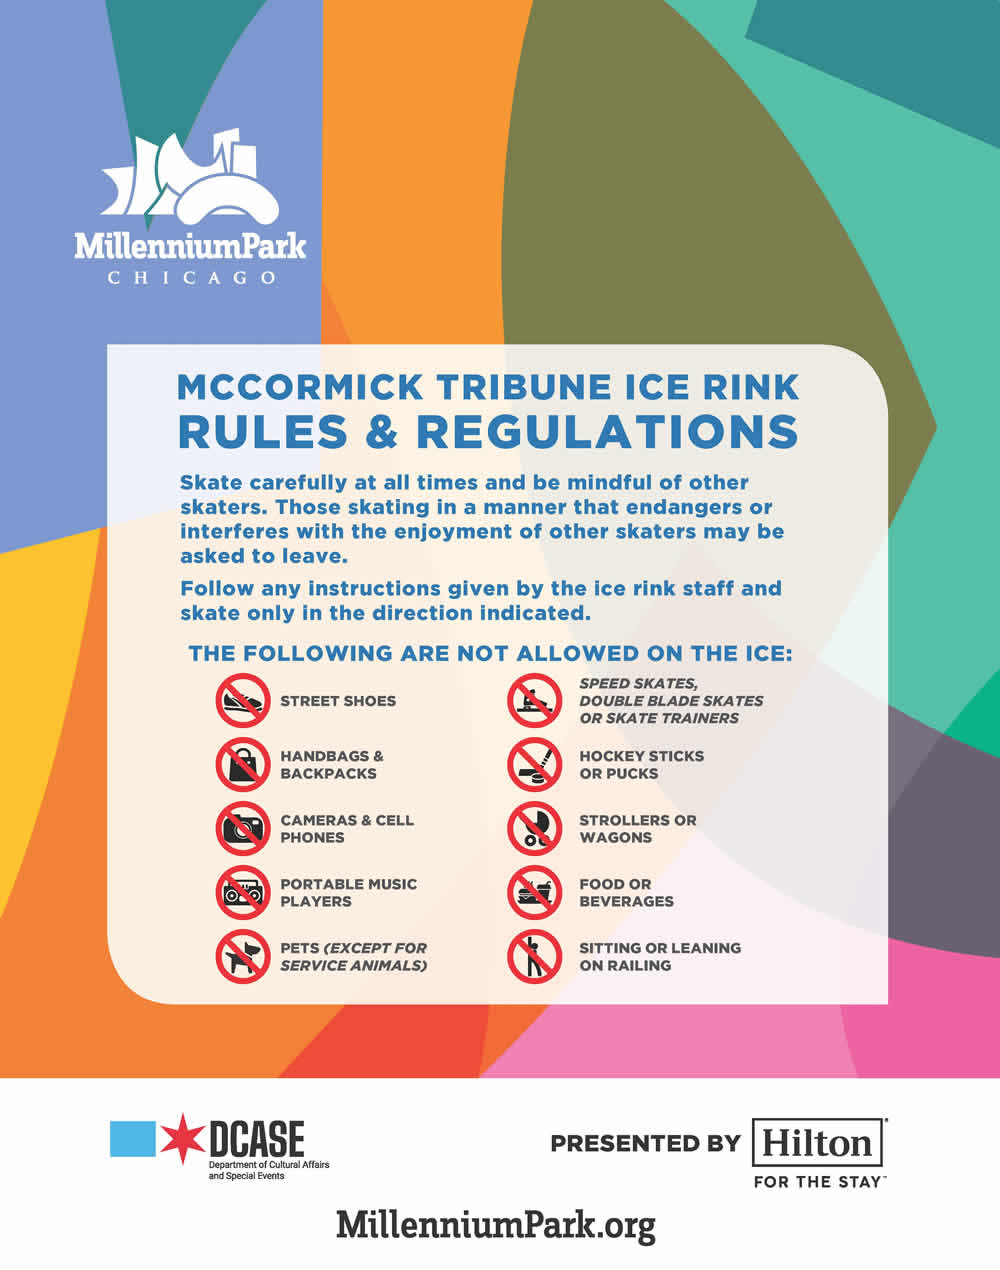 McCormick Tribune Ice Rink Rules & Regulations